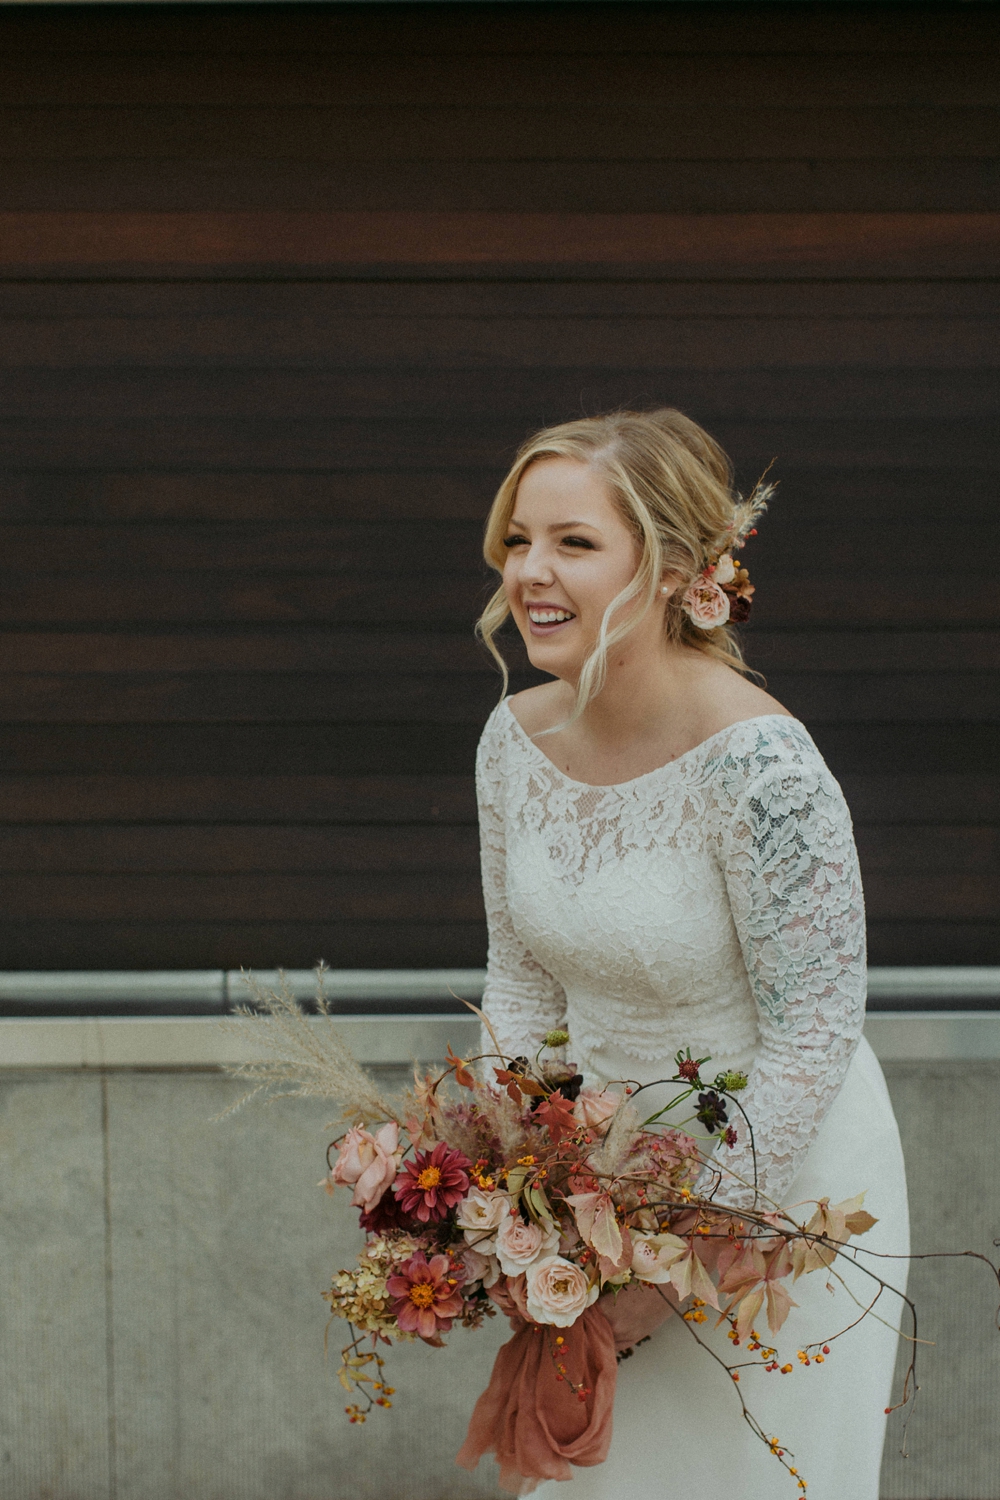 Bride and flowers at City Hall Toronto wedding.